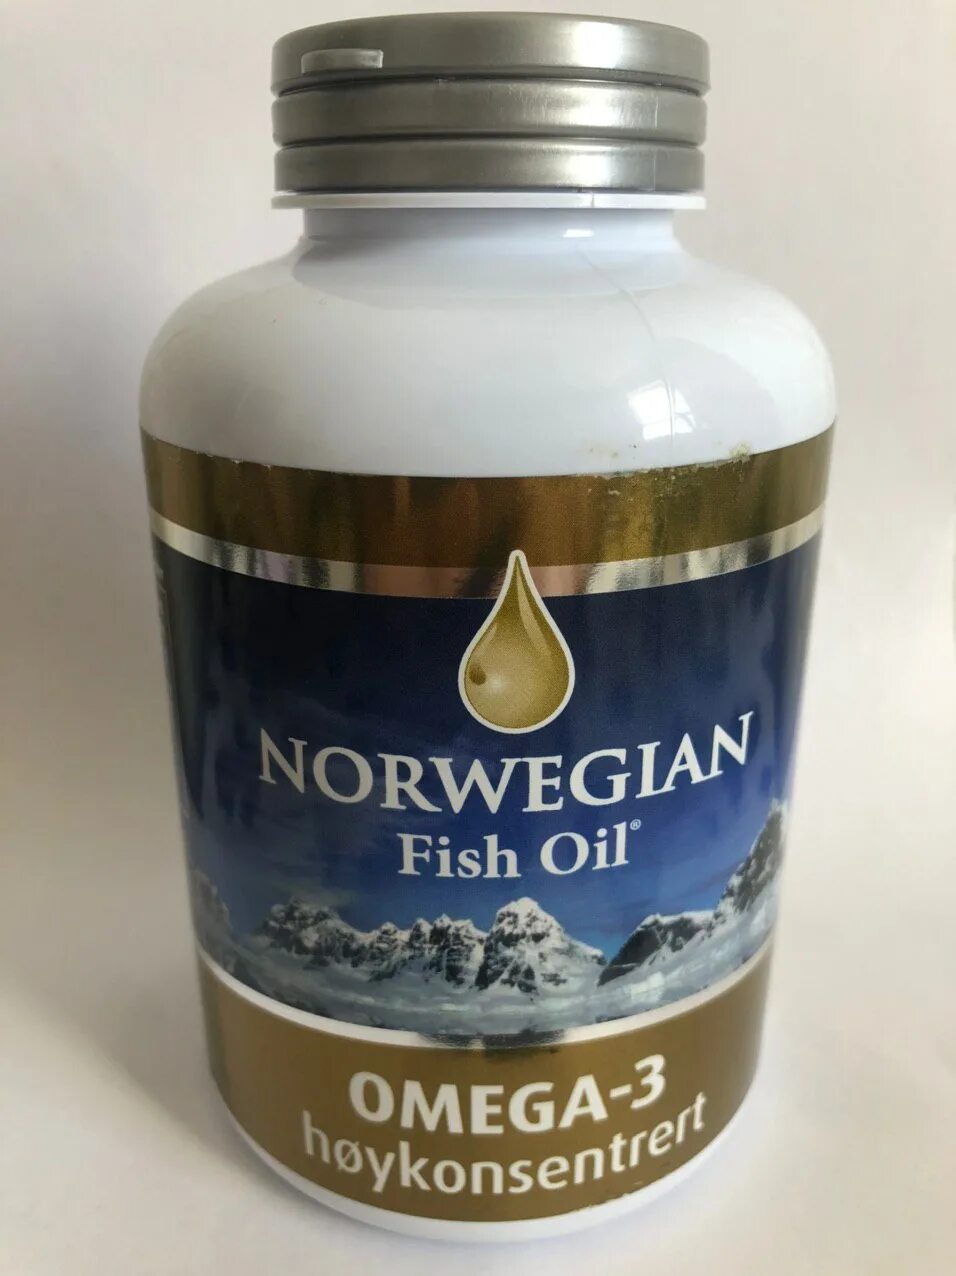 Купить омегу норвежскую. Norwegian Fish Oil Омега-3 форте. Омега-3 nfo/Норвегиан Фиш Ойл капсулы. Омега 3 НФО Норвегия. Омега 3 nfo Forte.